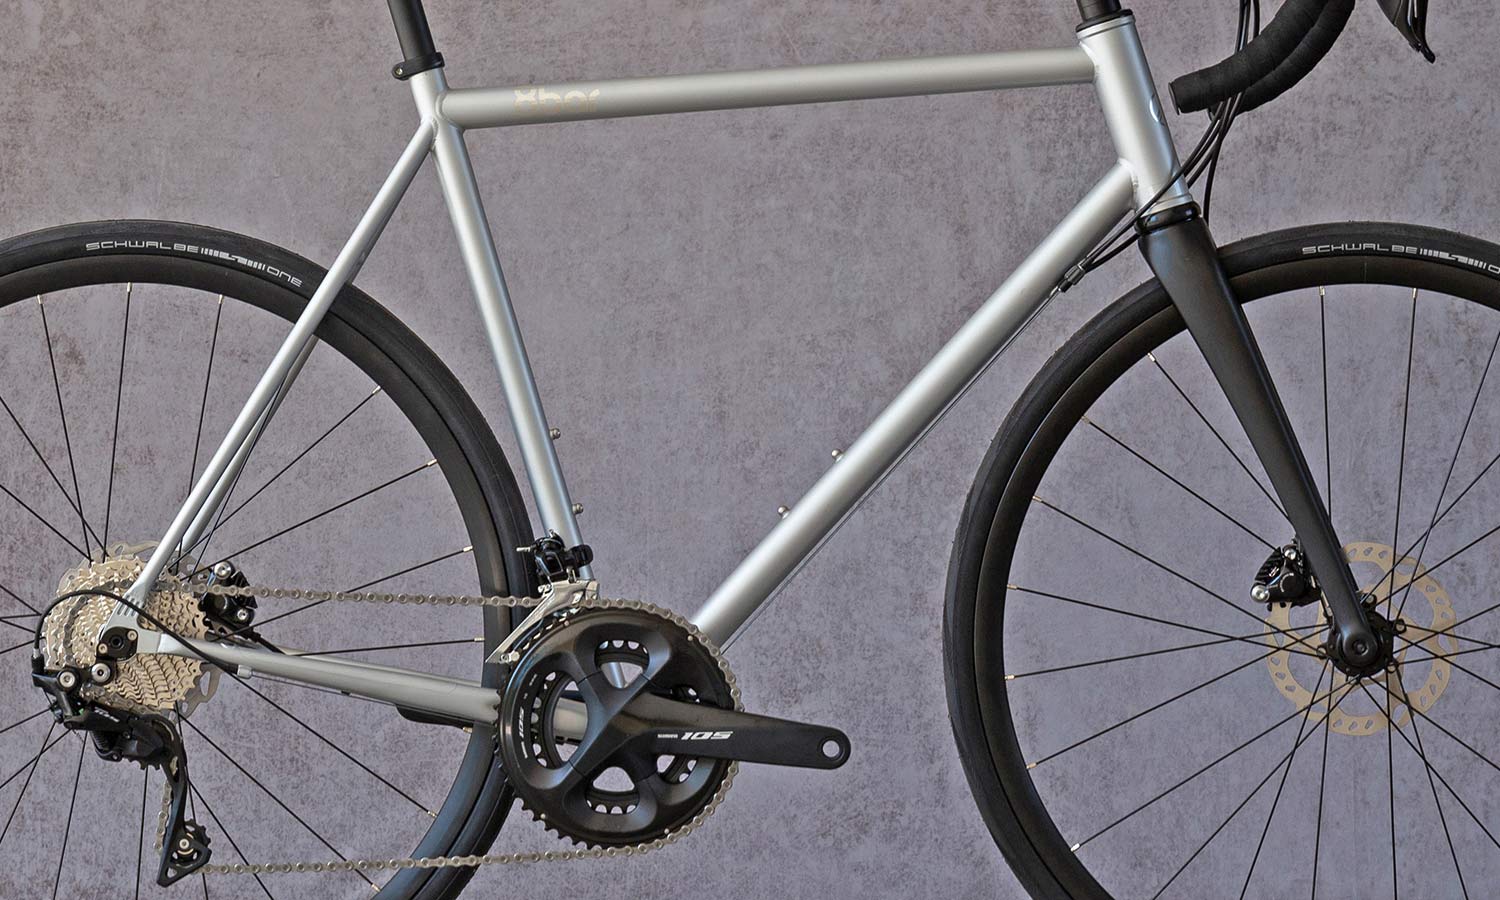 8bar Kronprinz Steel v1 affordable modern disc brake road bike, photo by Stefan Haehnel, frame detail